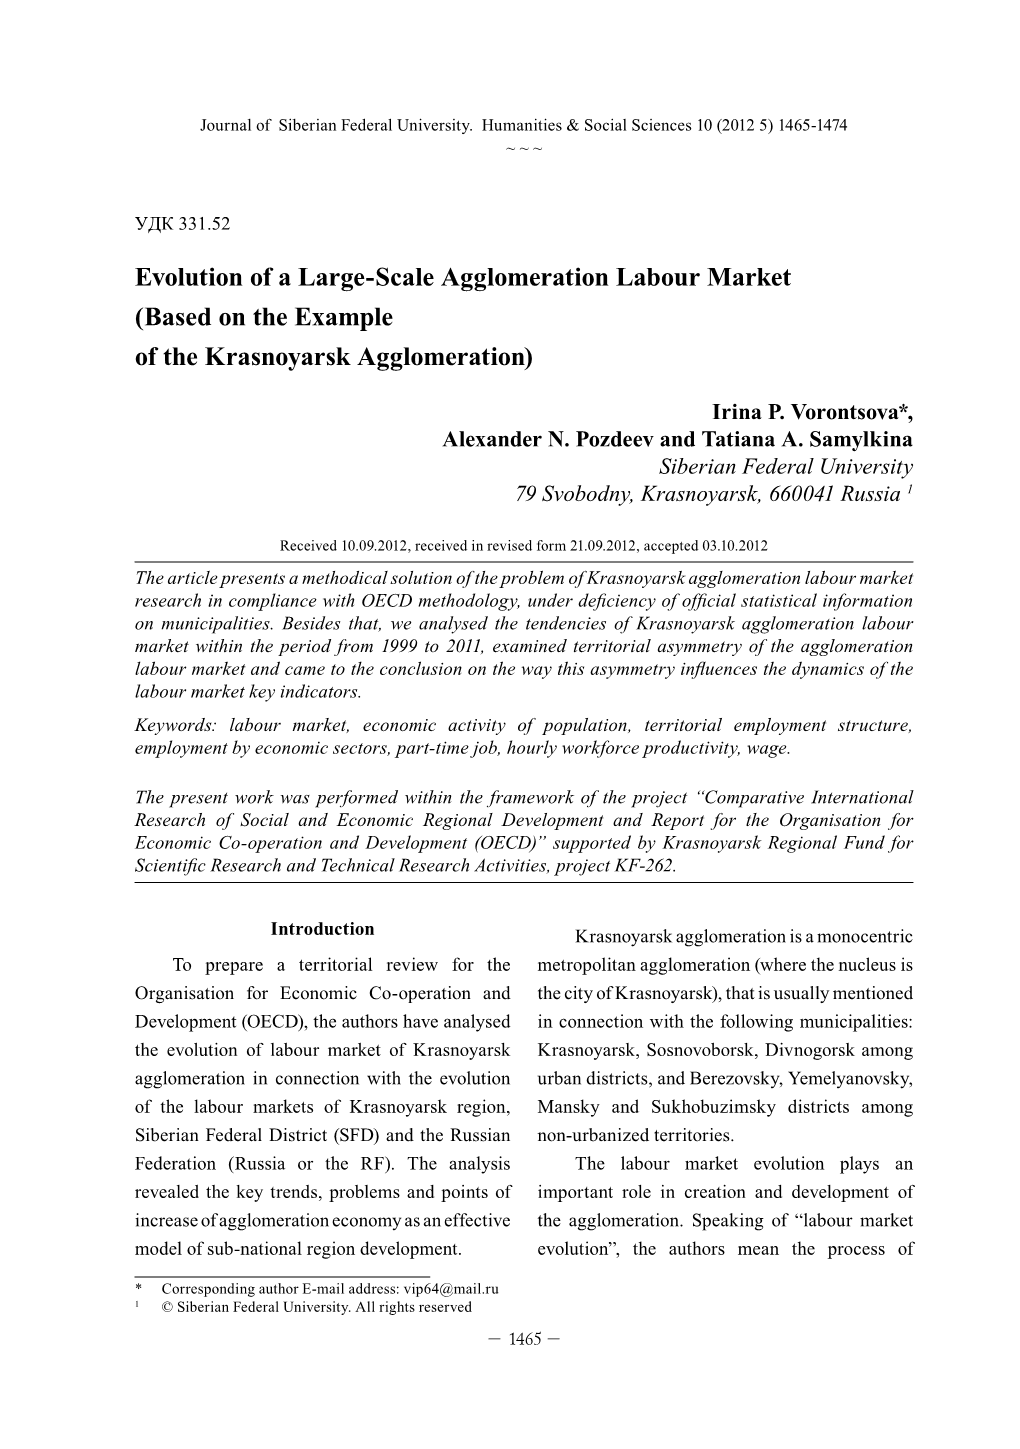 Evolution of a Large-Scale Agglomeration Labour Market (Based on the Example of the Krasnoyarsk Agglomeration)